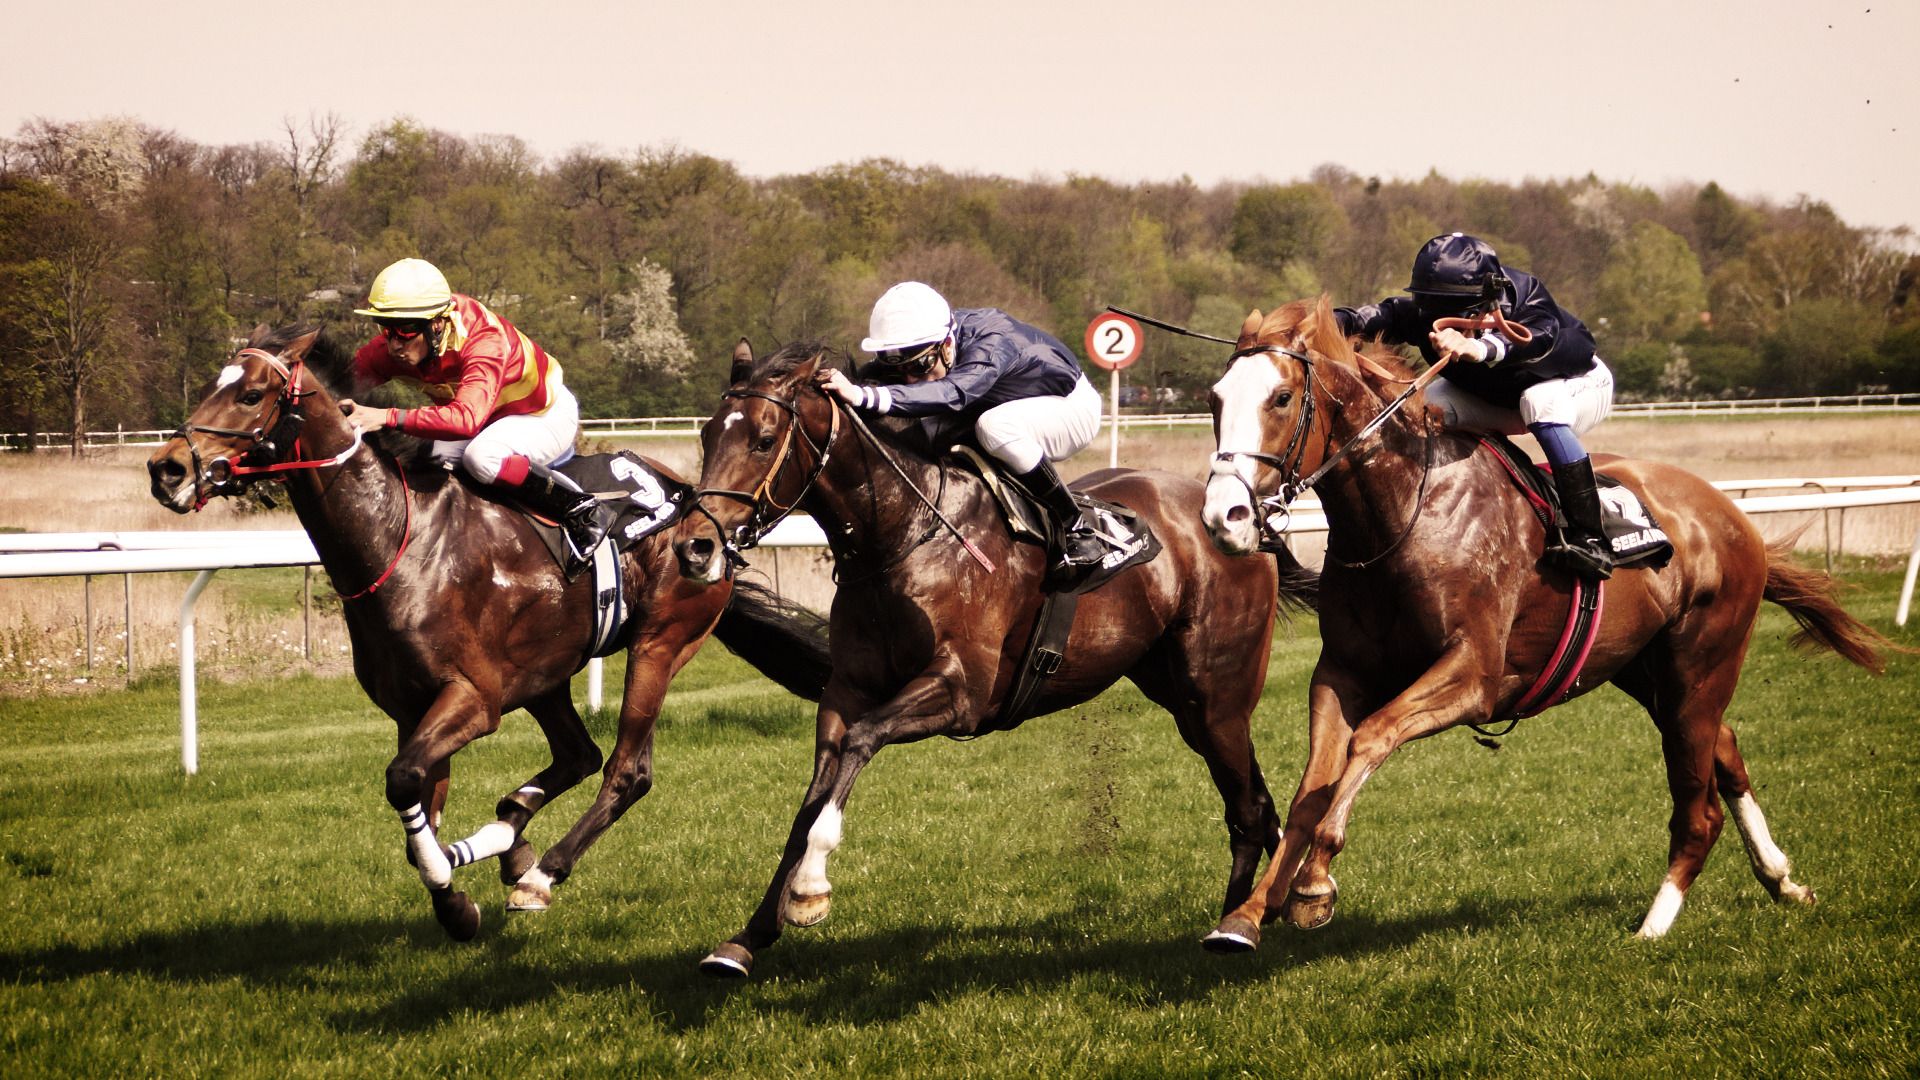 konjske utrke, kladionice.tv